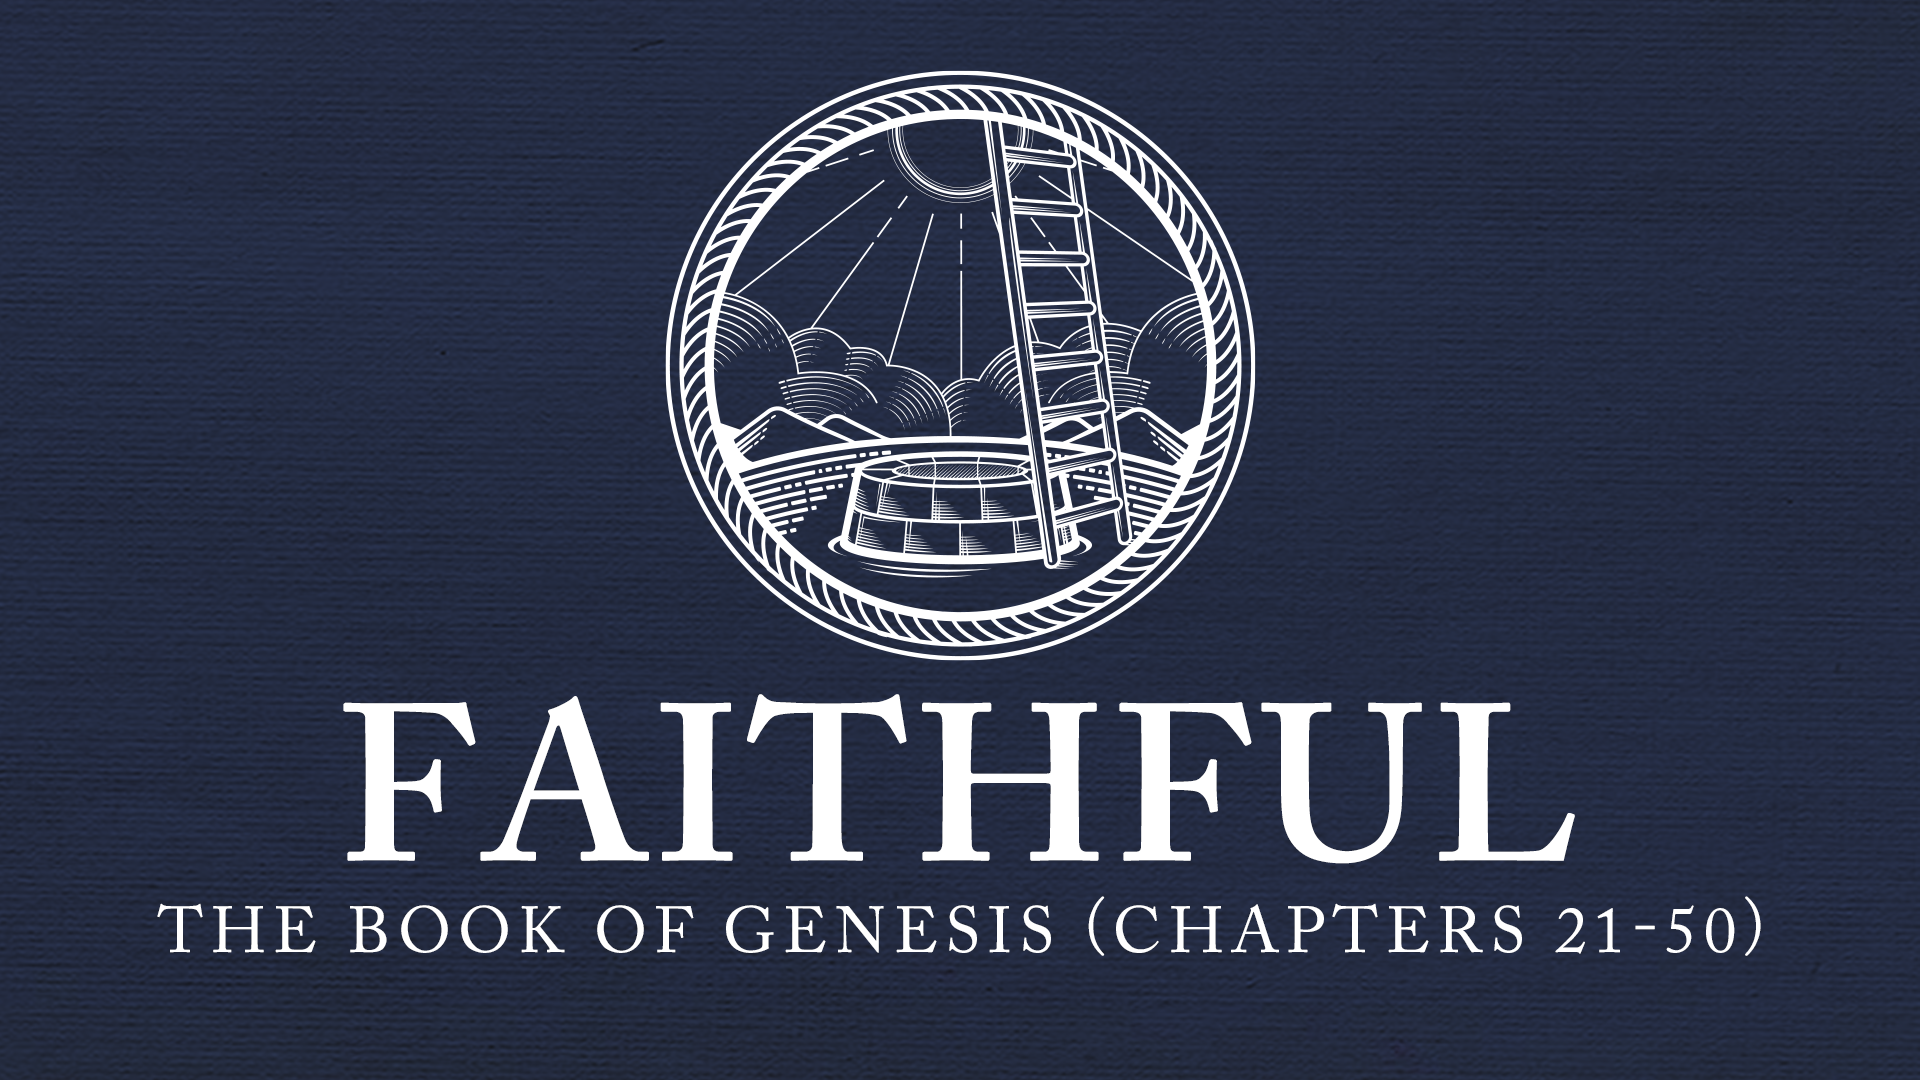 Featured image for “Faithful”